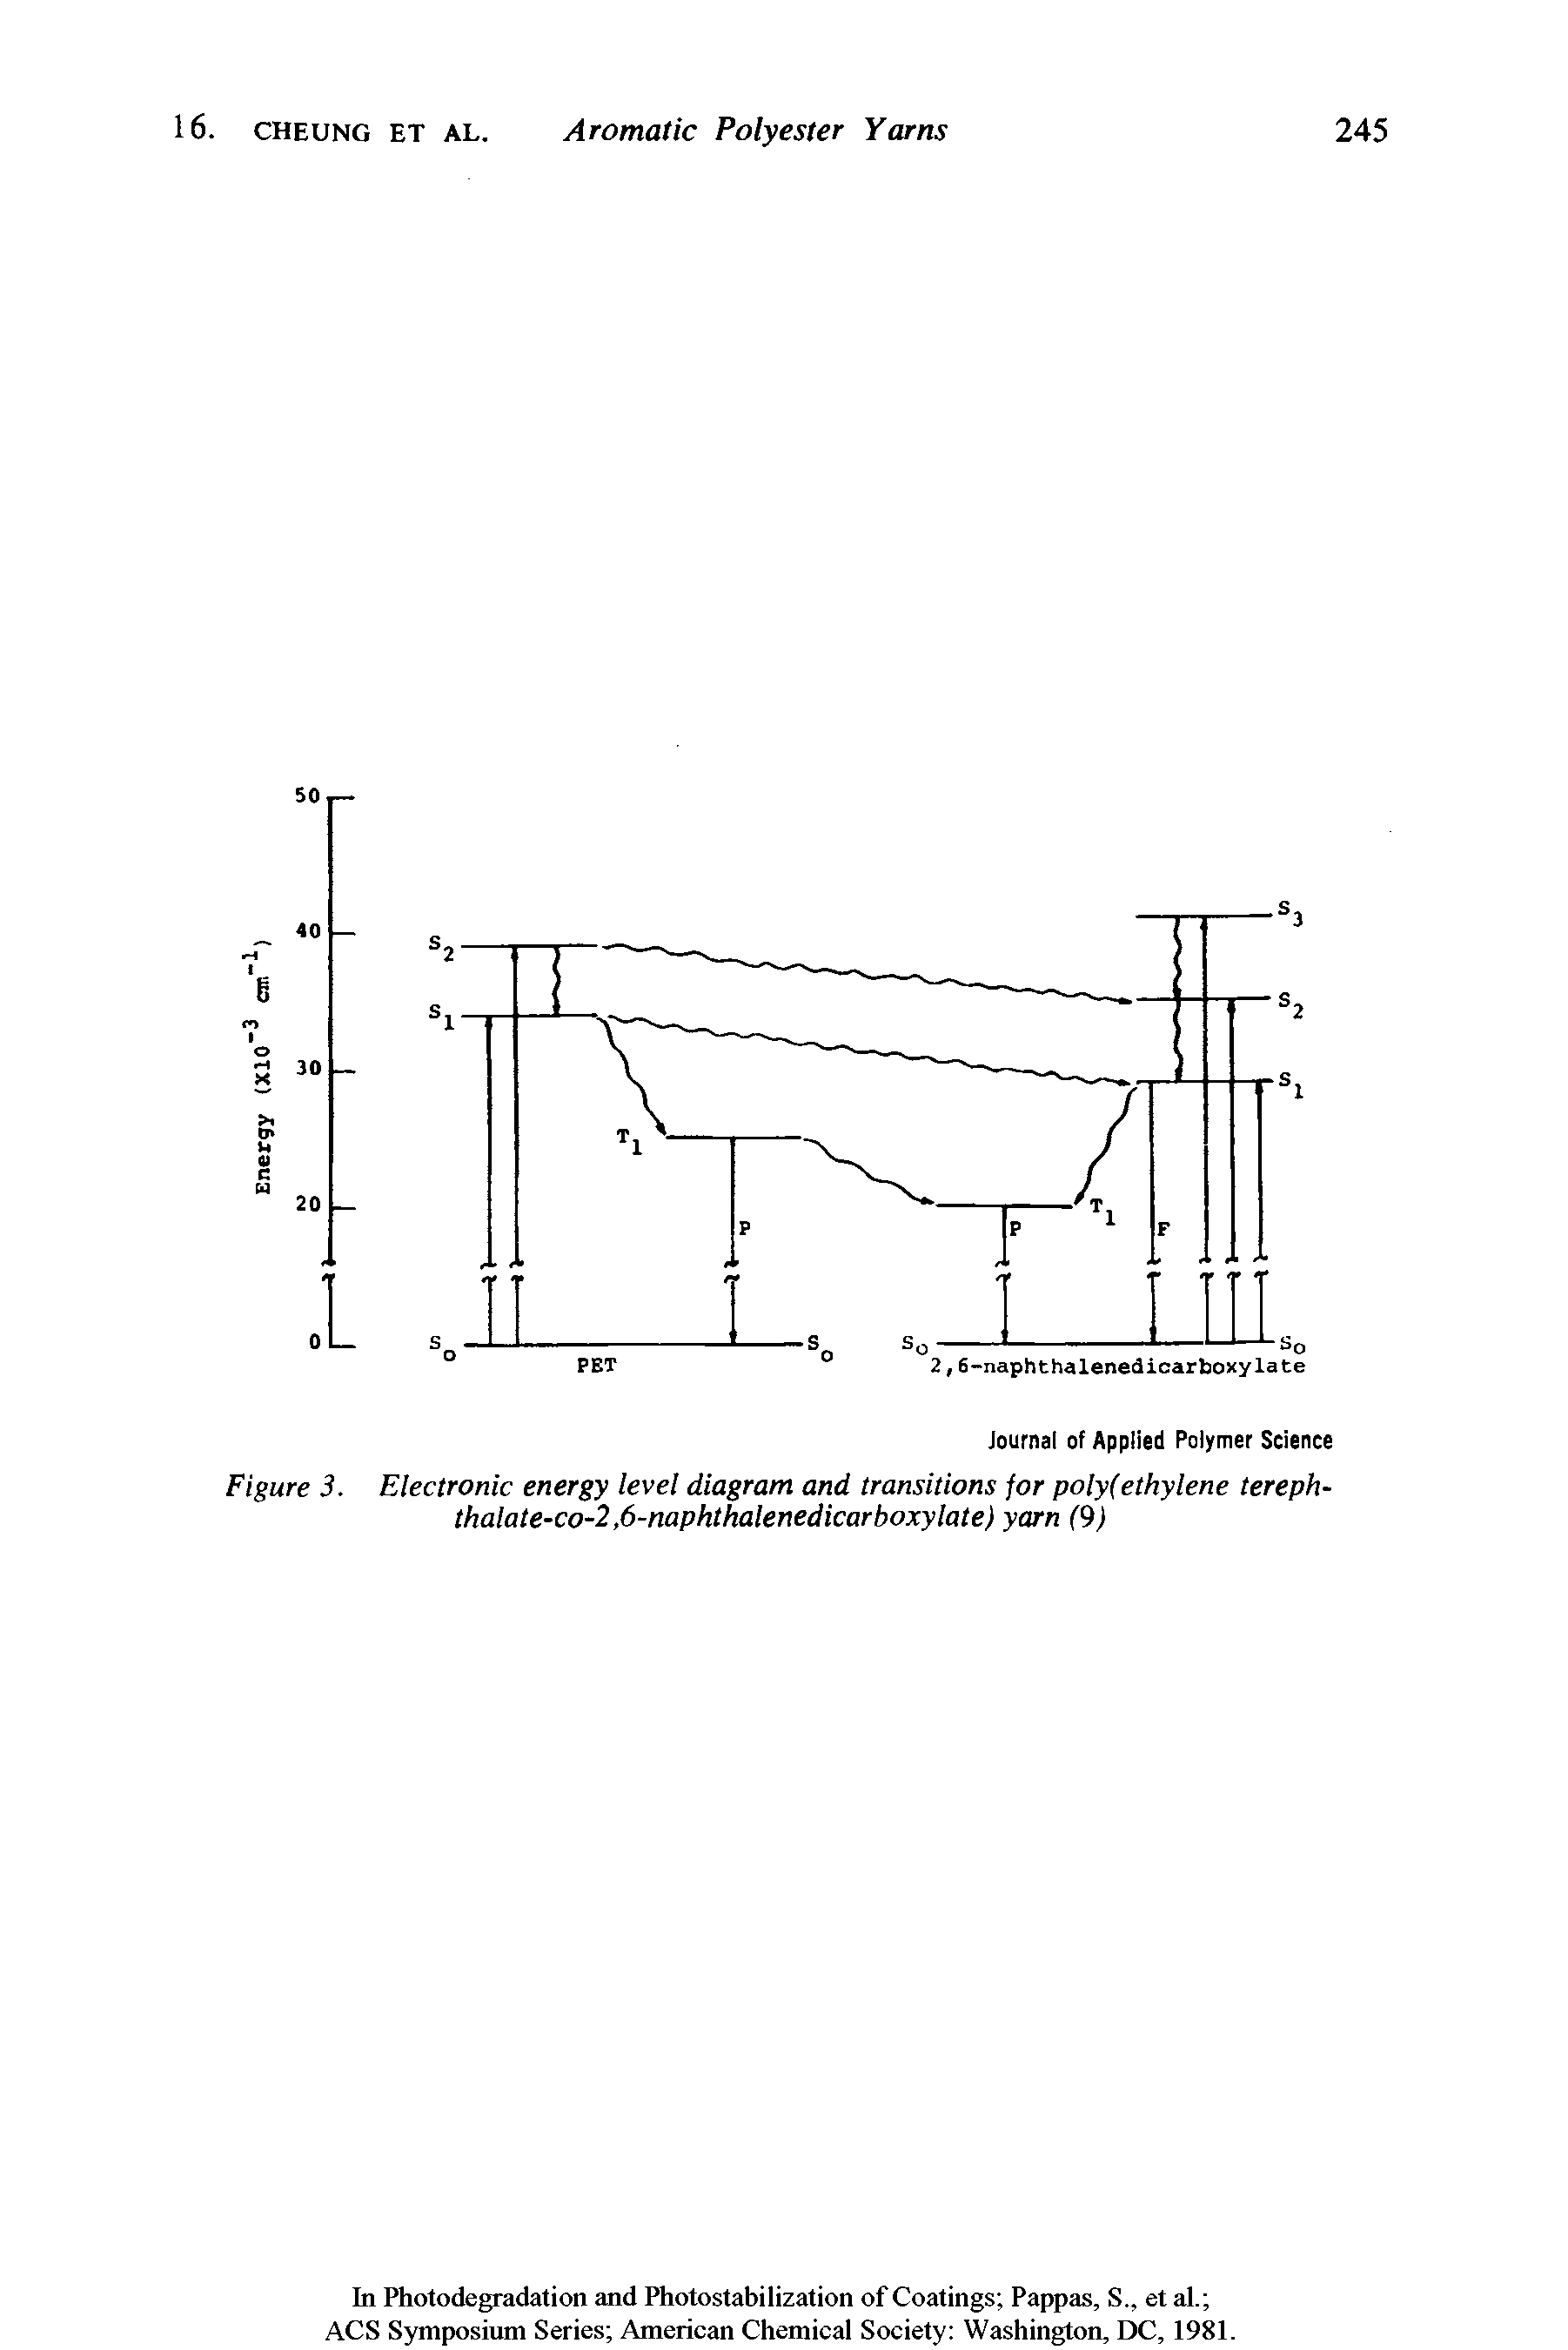 Figure 3. Electronic energy level diagram and transitions for polyfethylene tereph-thalate-co-2,6-naphthalenedicarboxylate) yarn (9)...